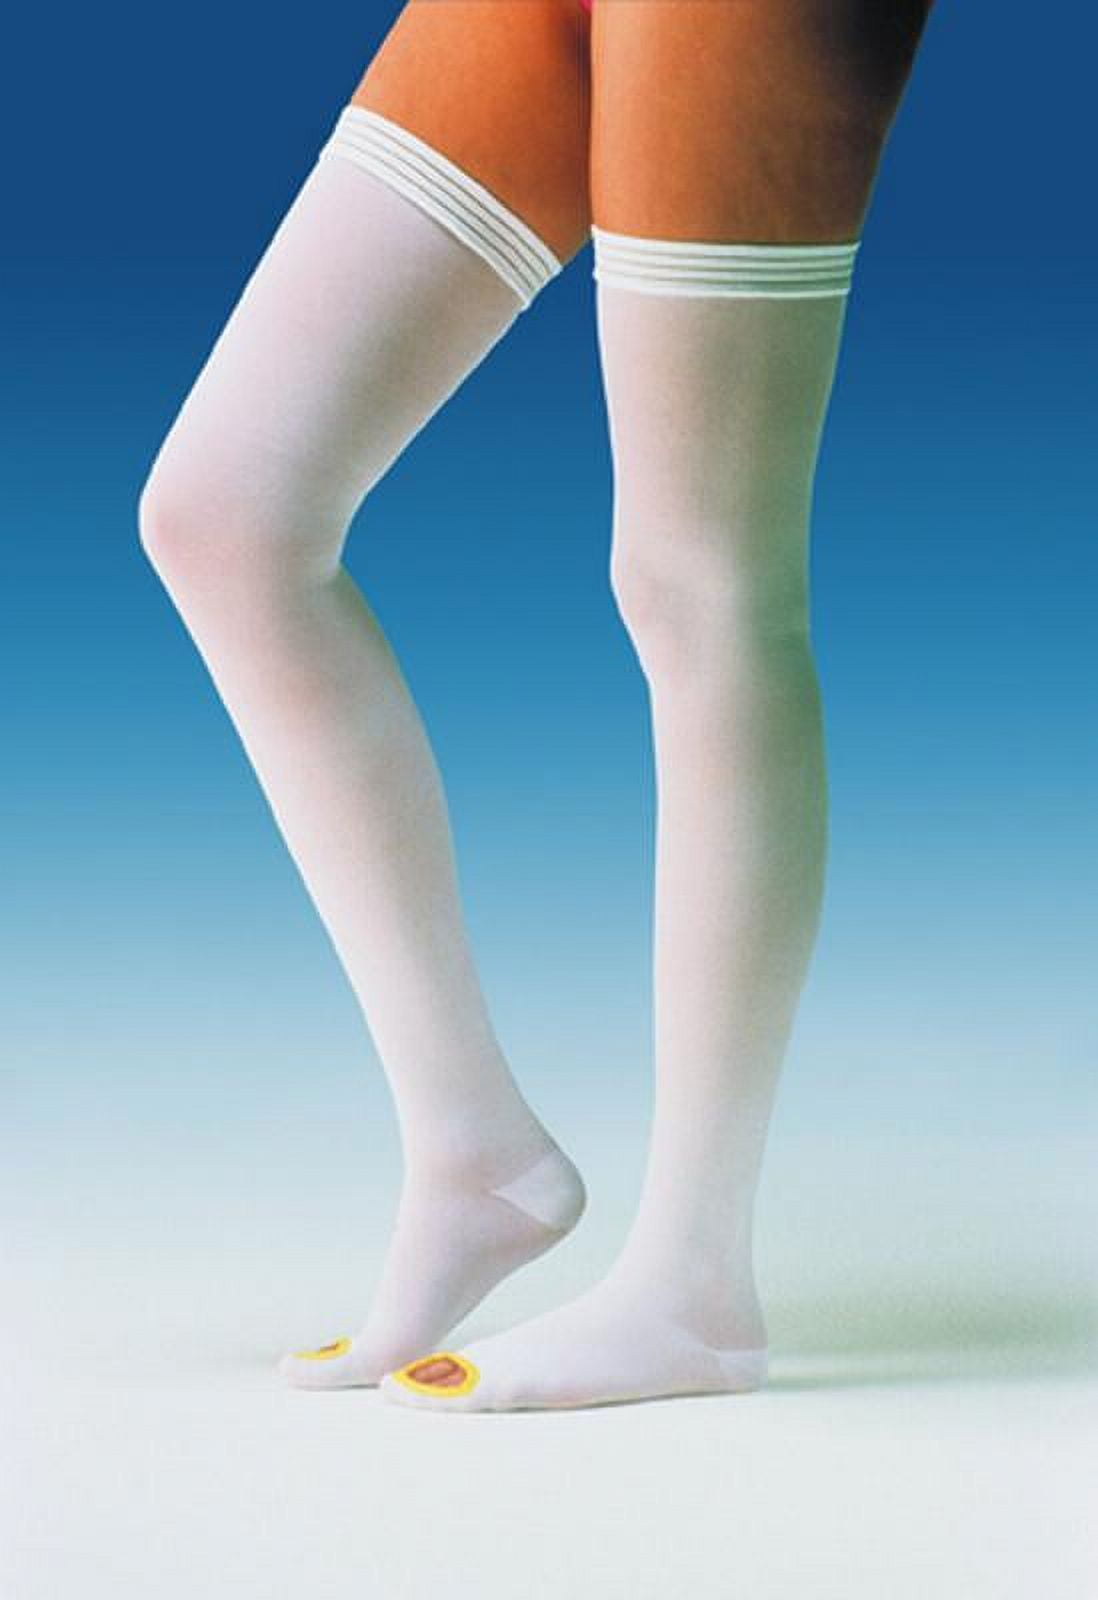 Jobst Anti-Embolism Stockings